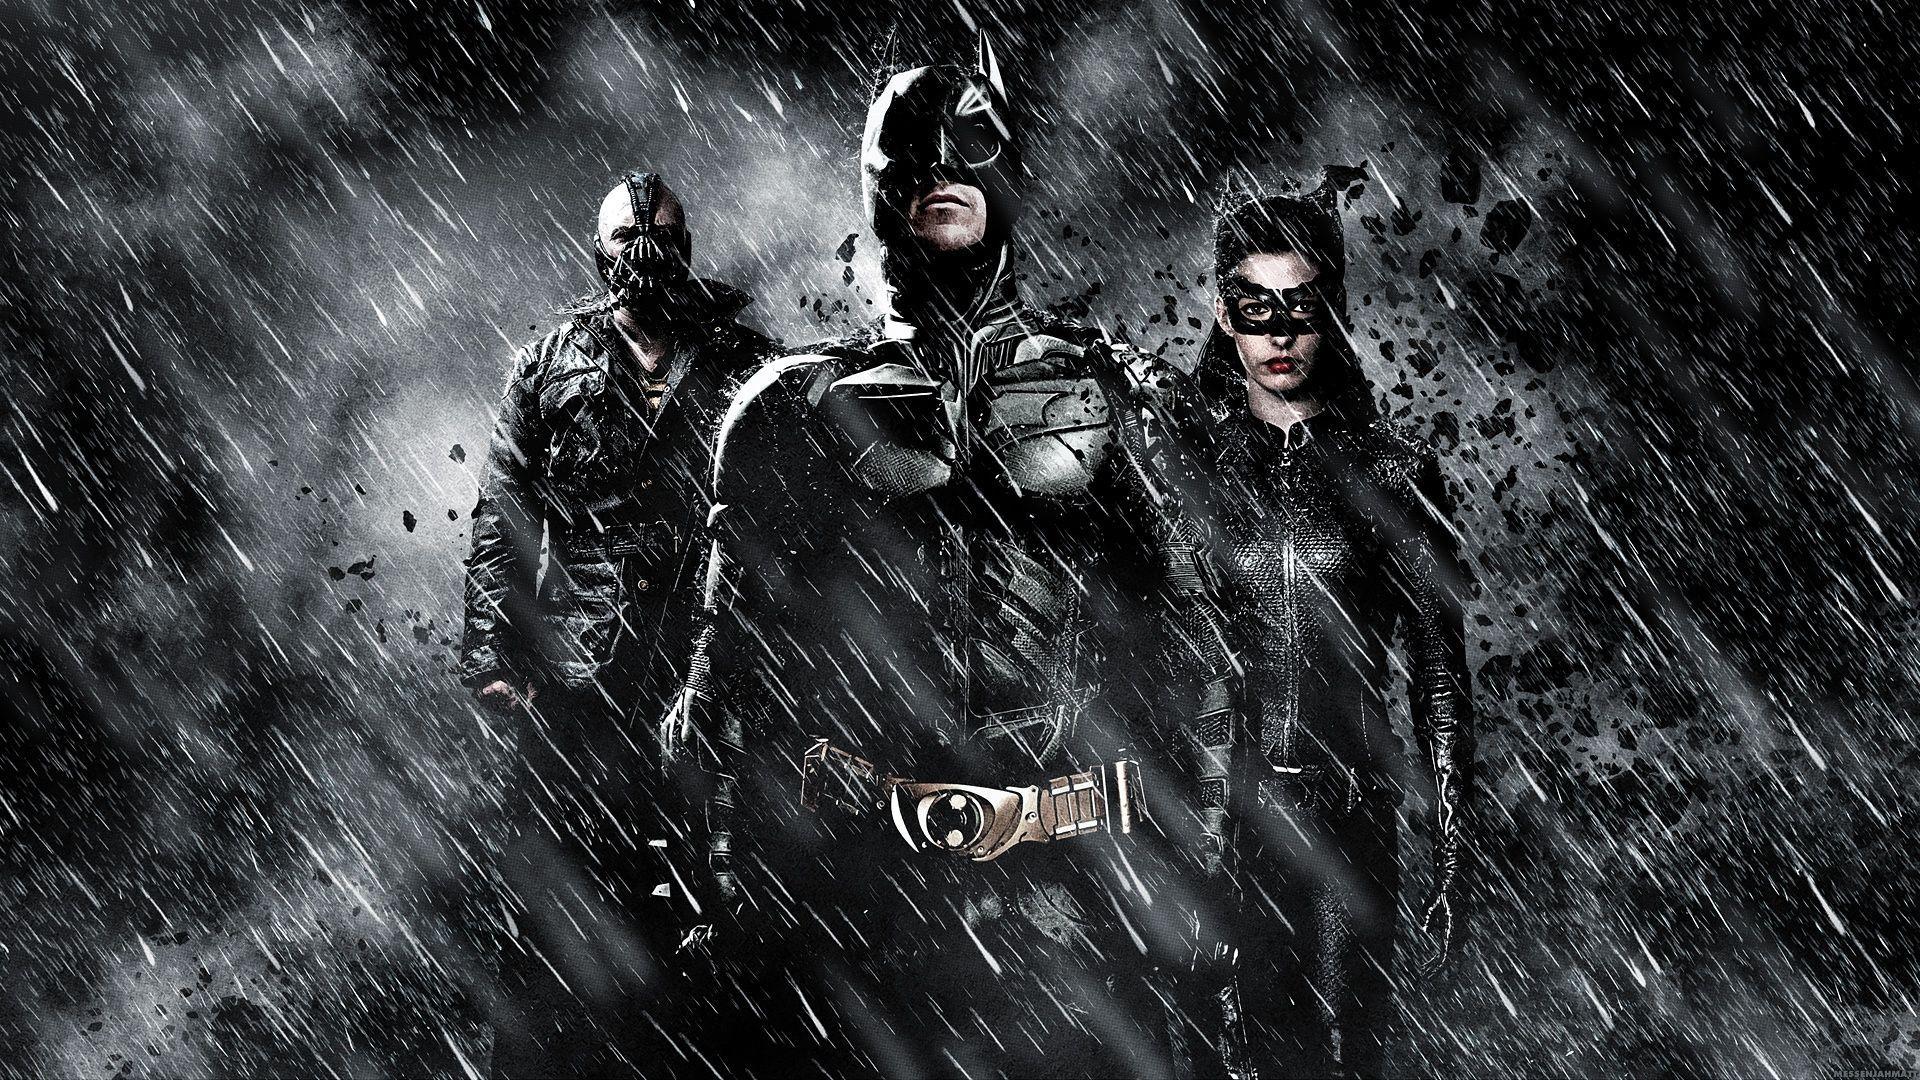 The Dark Knight Rises Movie Wallpaper, HD 1080p. The dark